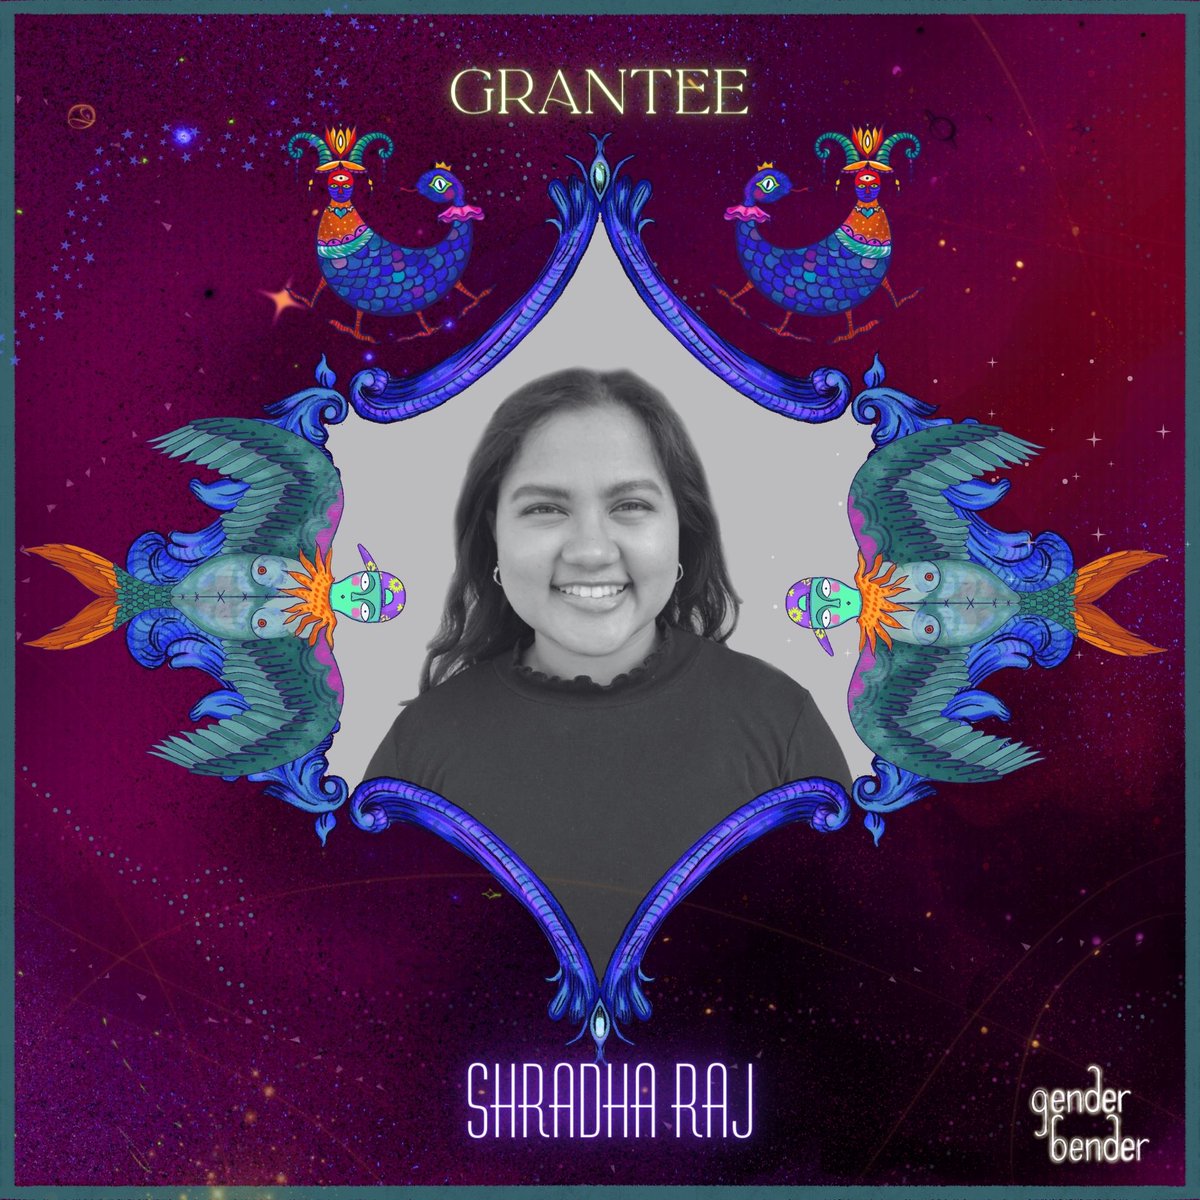 Shradha Raj (she/her), Bangalore - Gender Bender 2023 Grantee